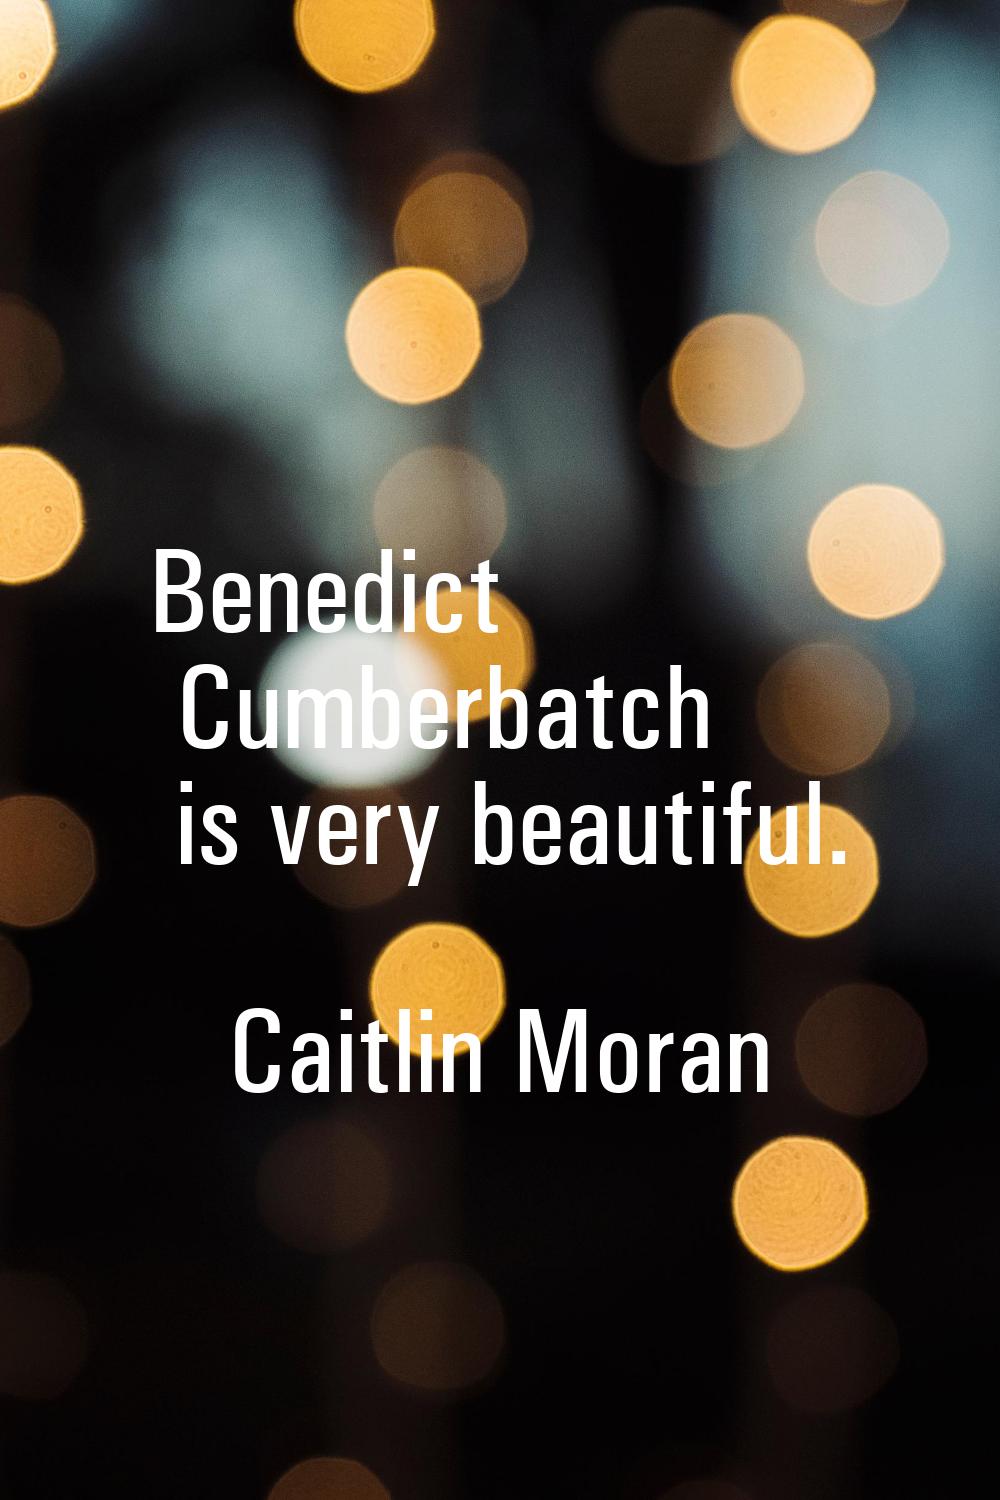 Benedict Cumberbatch is very beautiful.